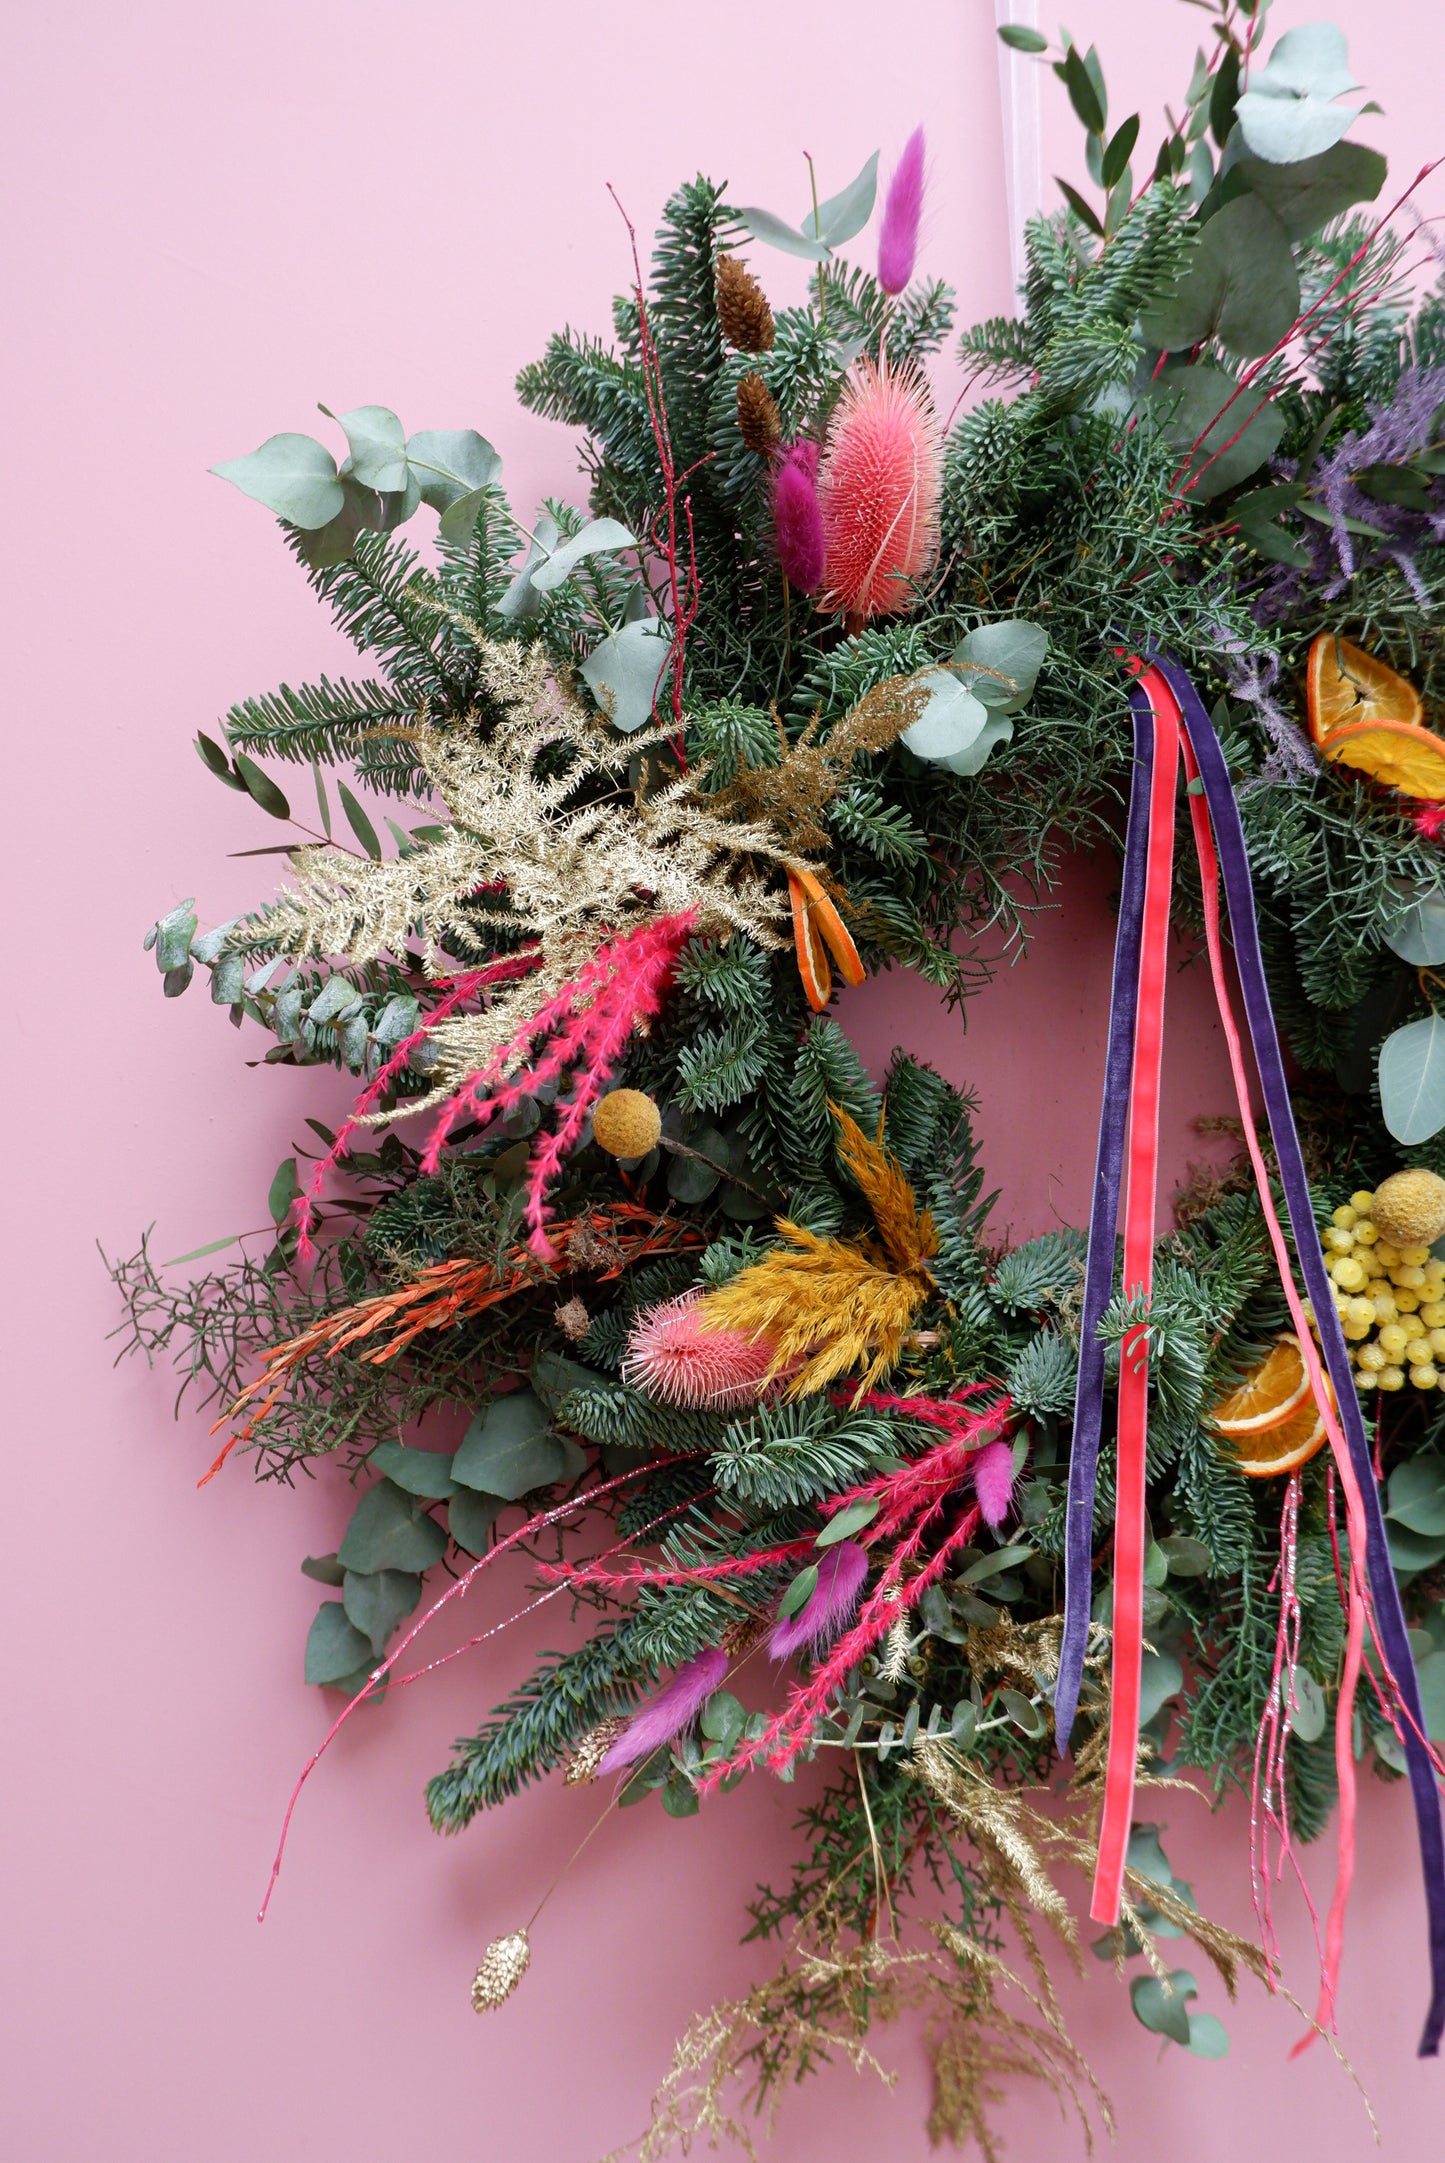 NEW DATE Luxe Fresh Christmas Wreath Workshop  - 29th November  Wilde Posies Studio, Caerphilly